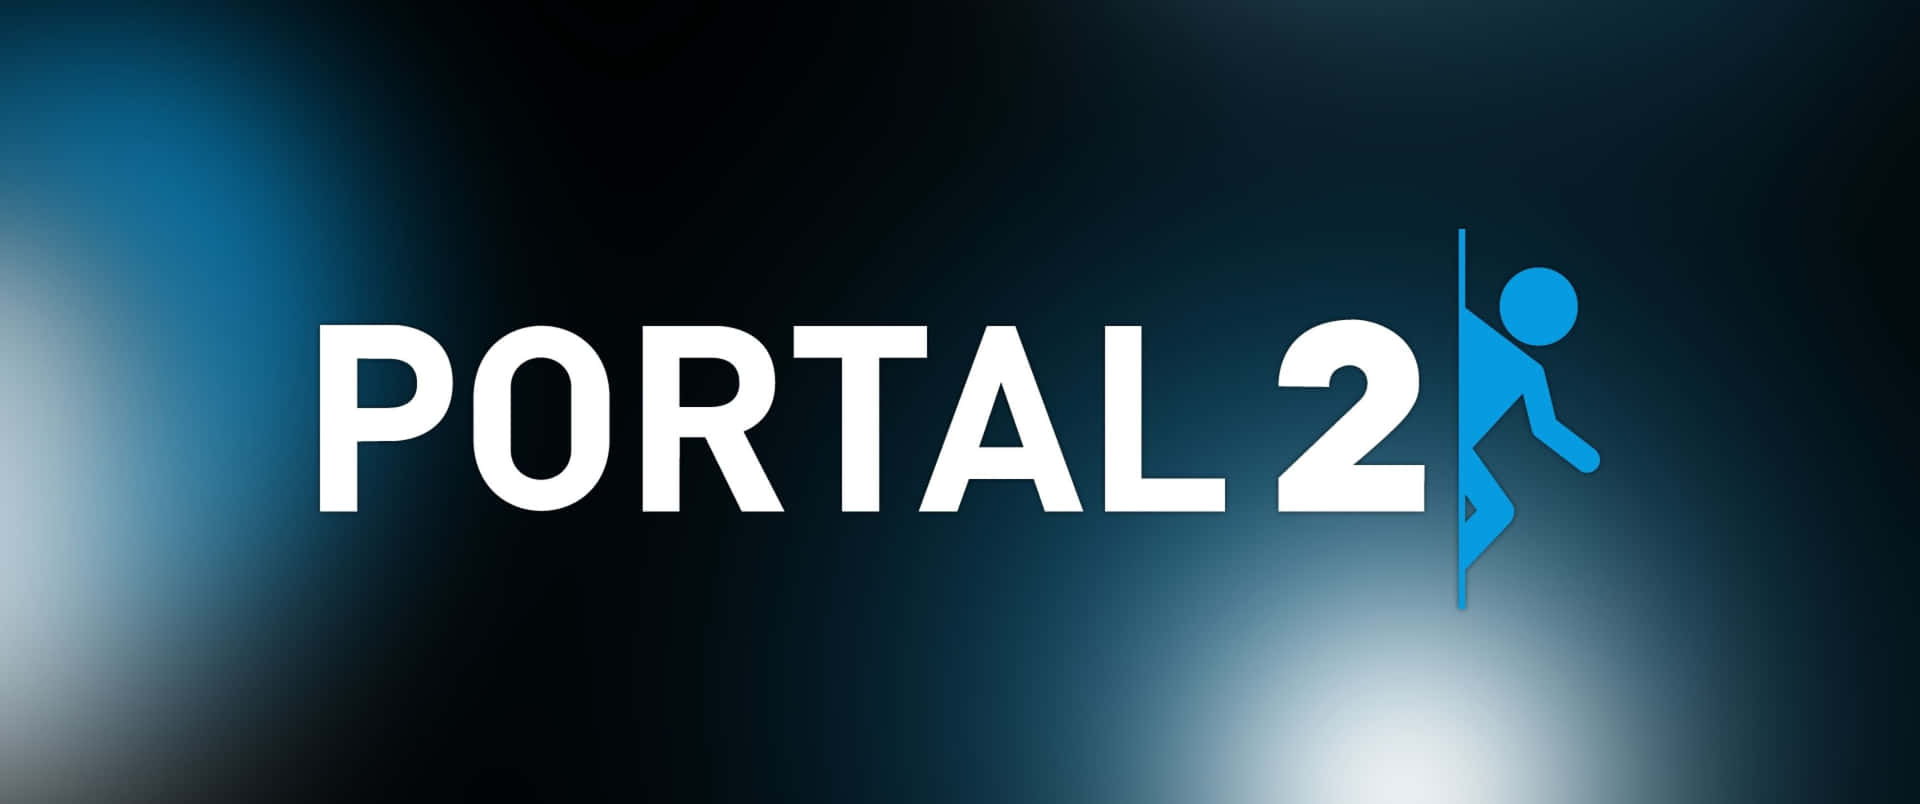 Portal 2 - A Blue Logo With A Man On It